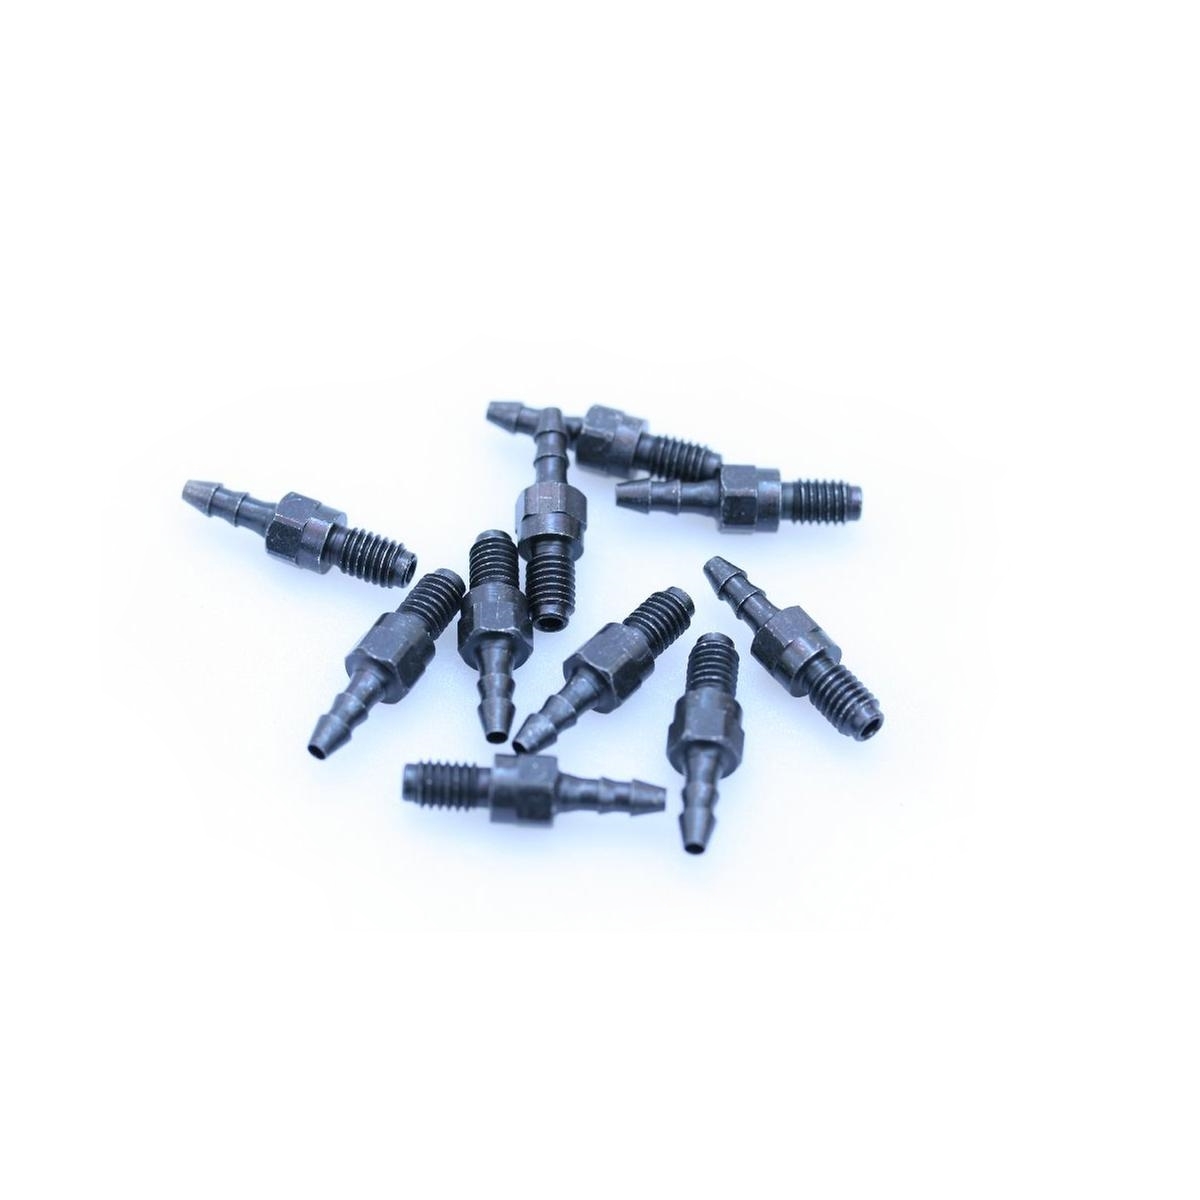 Racor dentado M6 Conexión de tubo Calibrador/Adaptador de llenado MT2 a partir de 2015 1ud